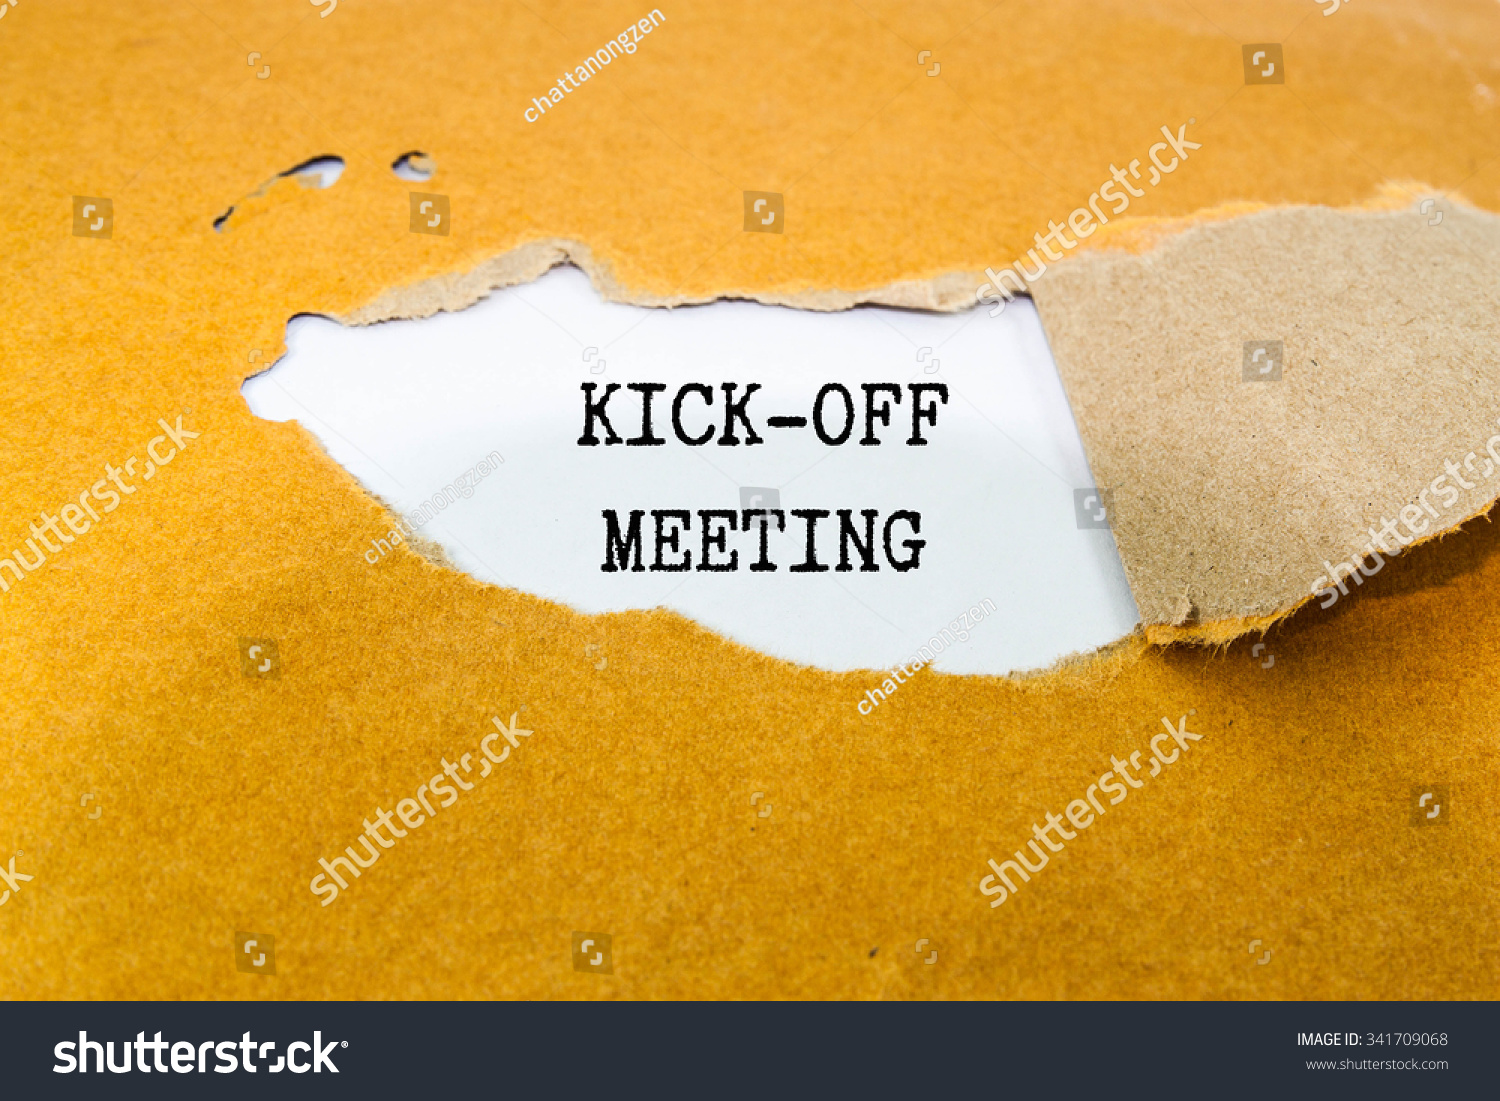  Kick-off meeting Message on brown envelope  #341709068